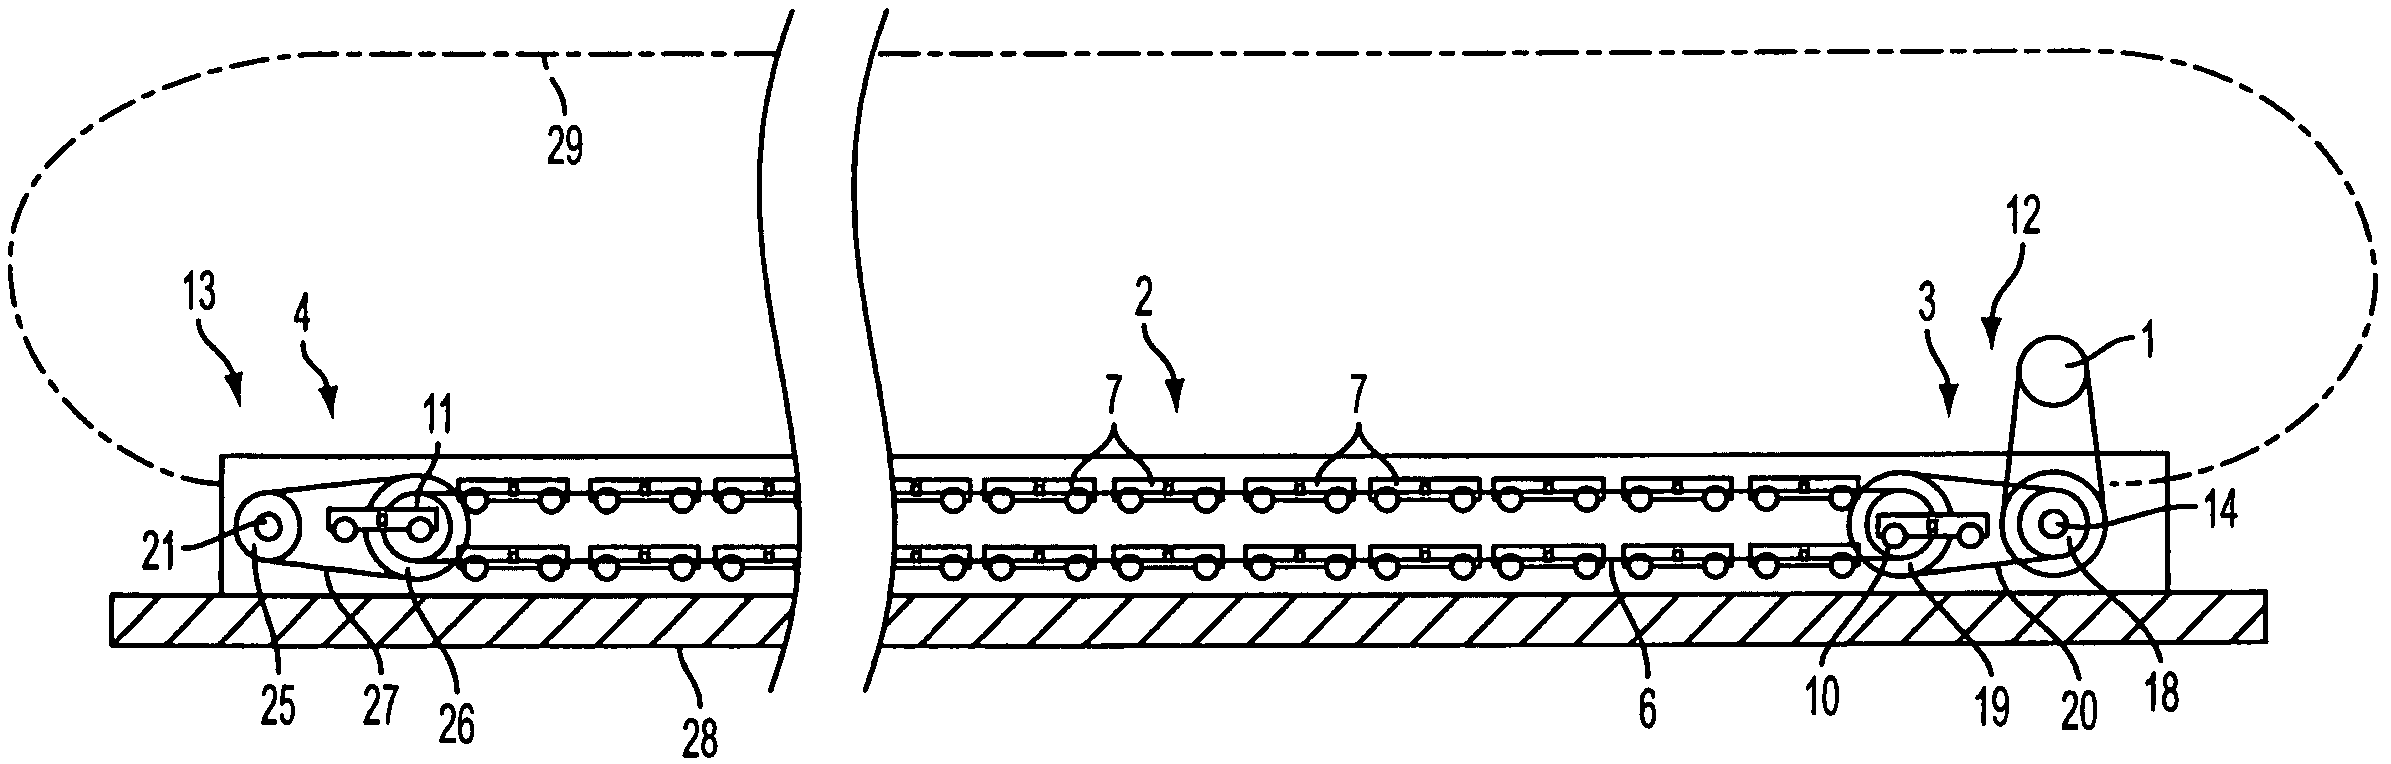 Travelator, moving ramp or escalator